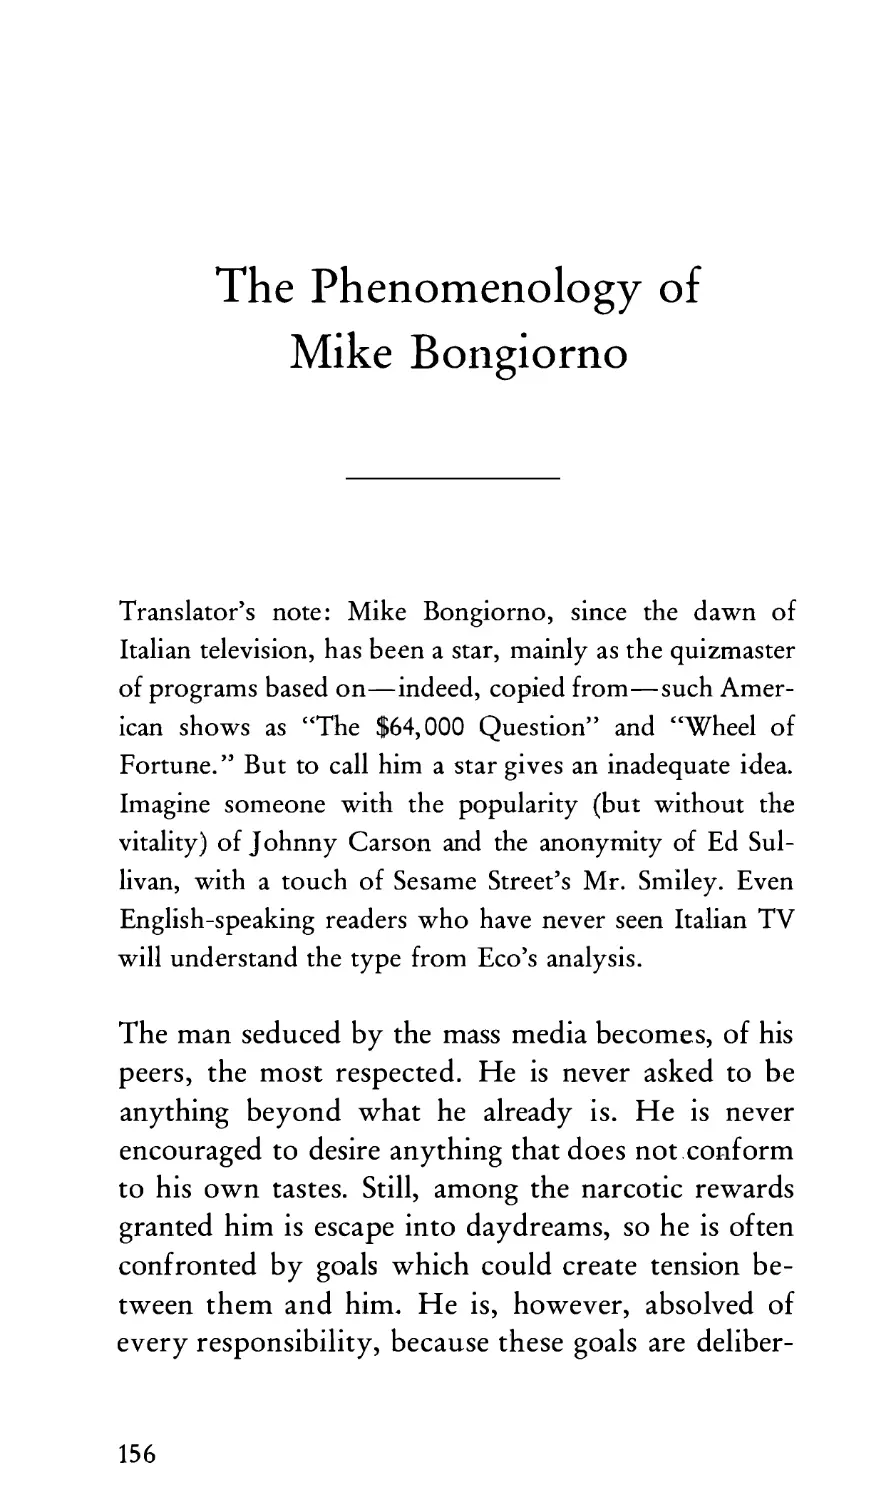 The Phenomenology of Mike Bongiorno